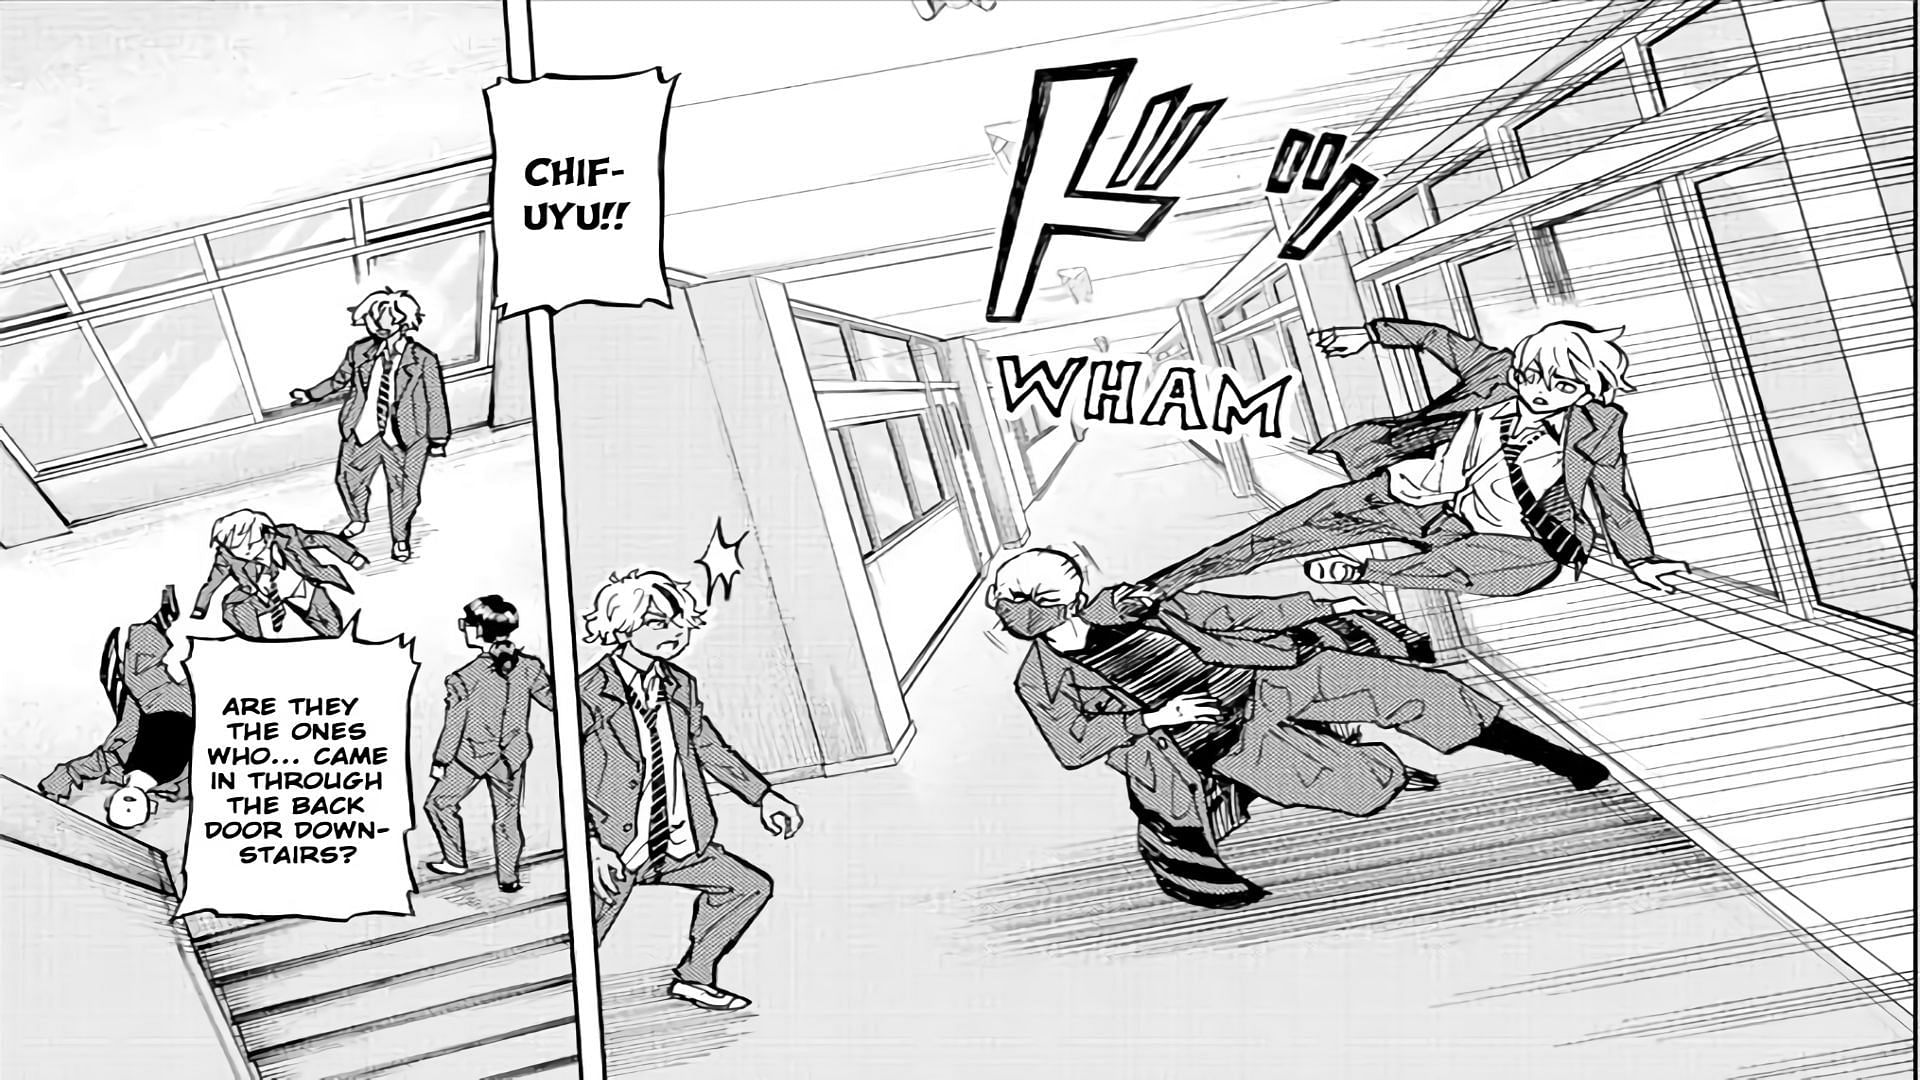 Chifuyu to the rescue in Tokyo Revengers spinoff chapter 5 (Image via Ken Wakui, Kodansha)